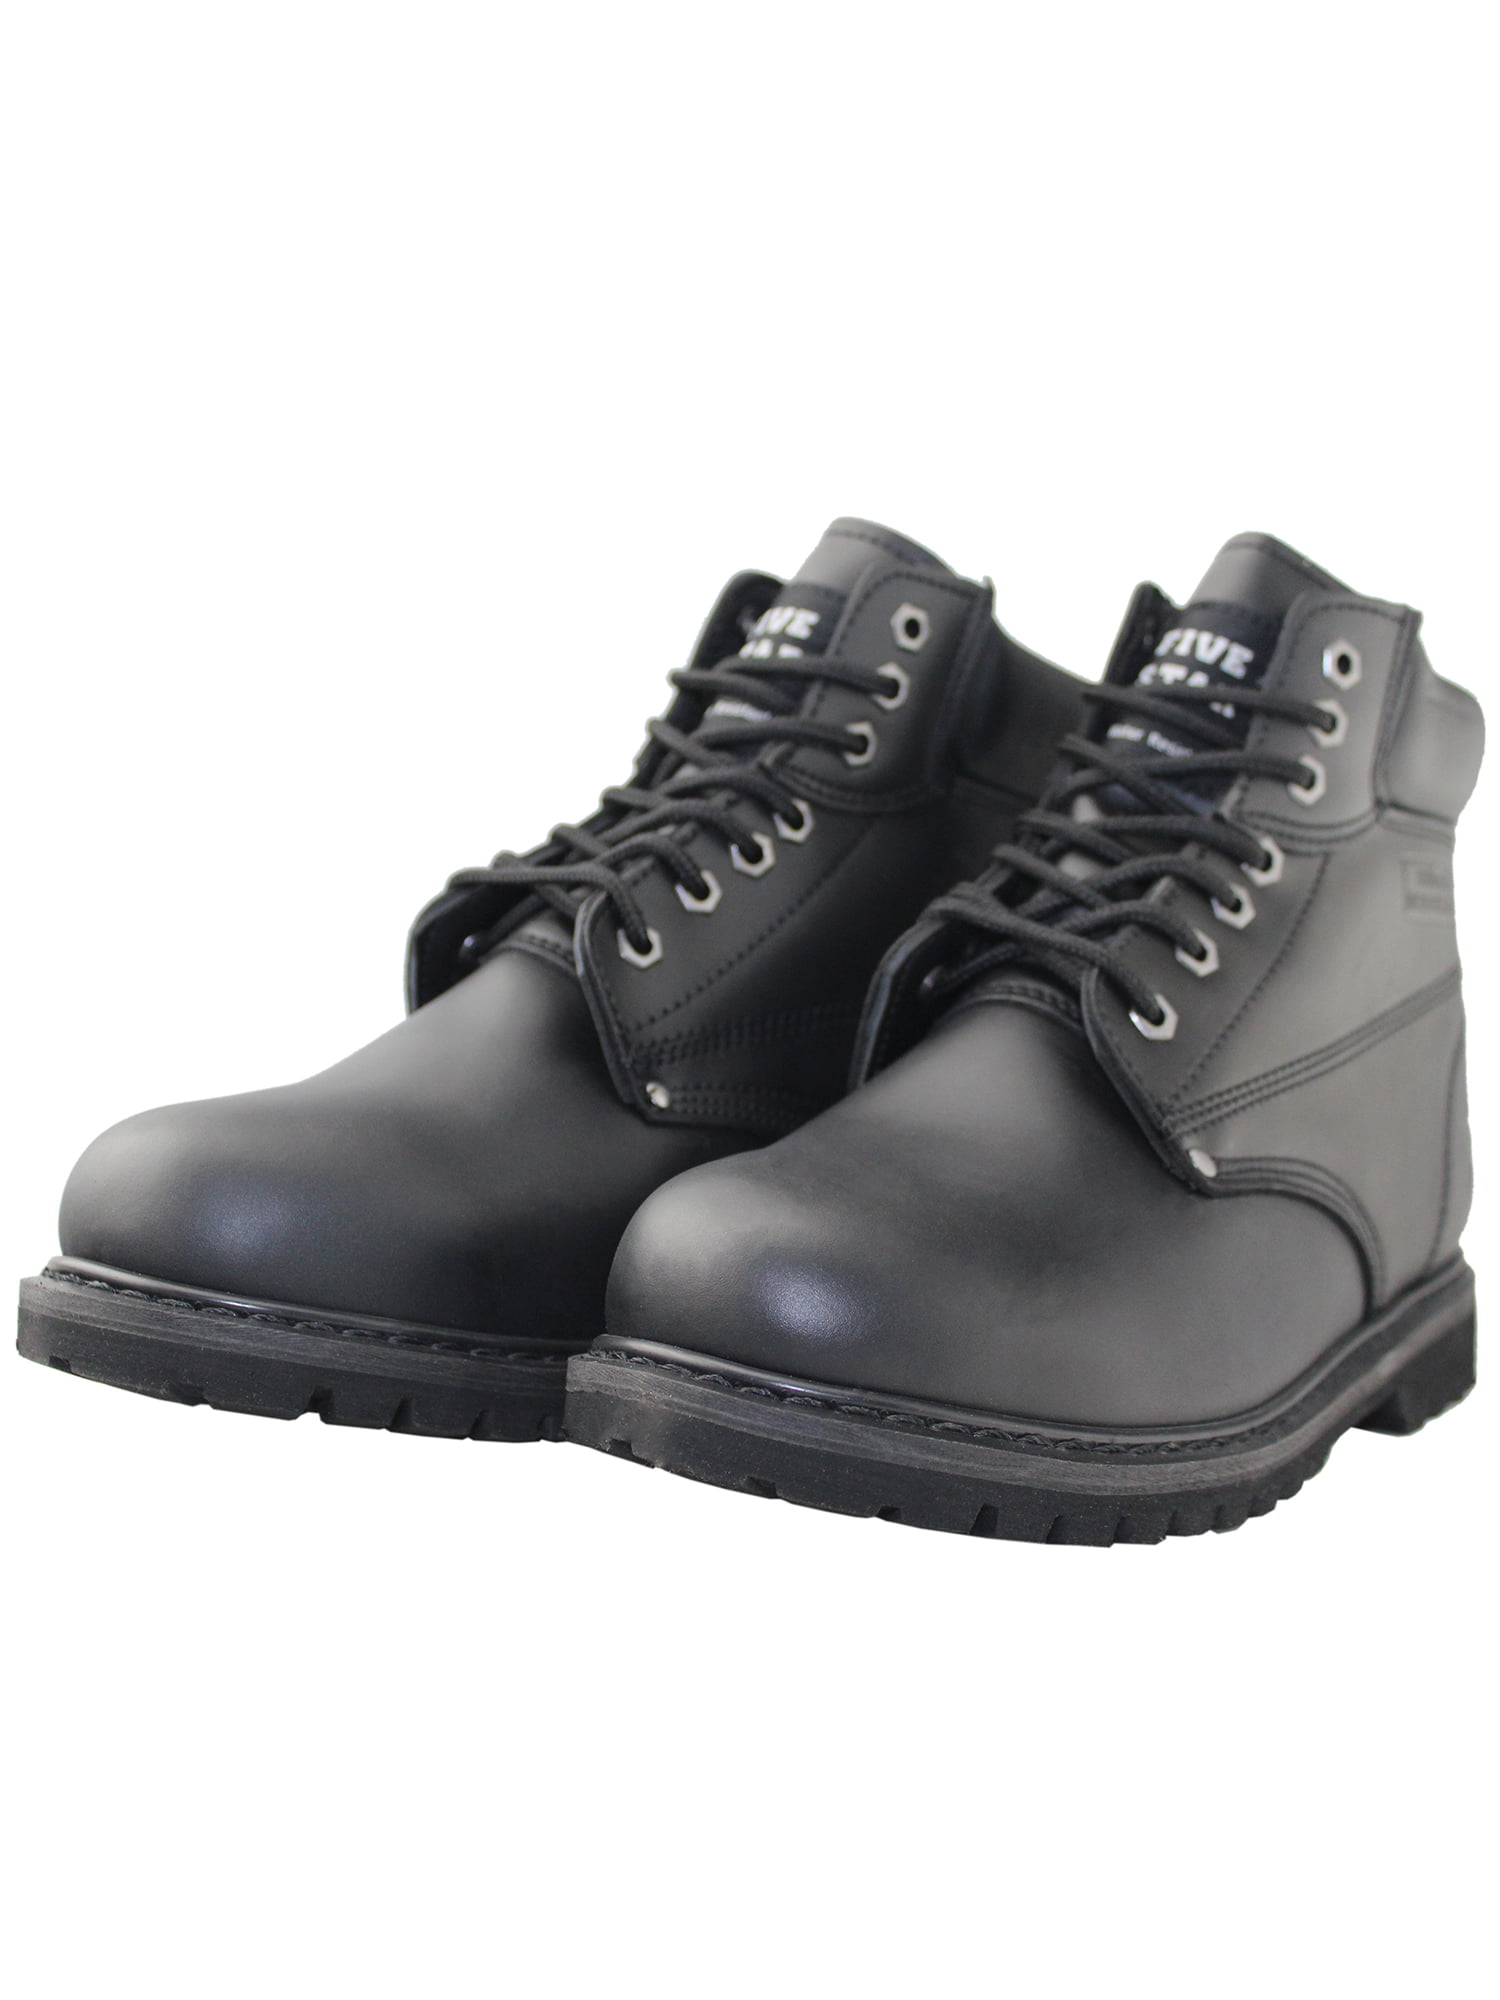 walmart mens black work shoes